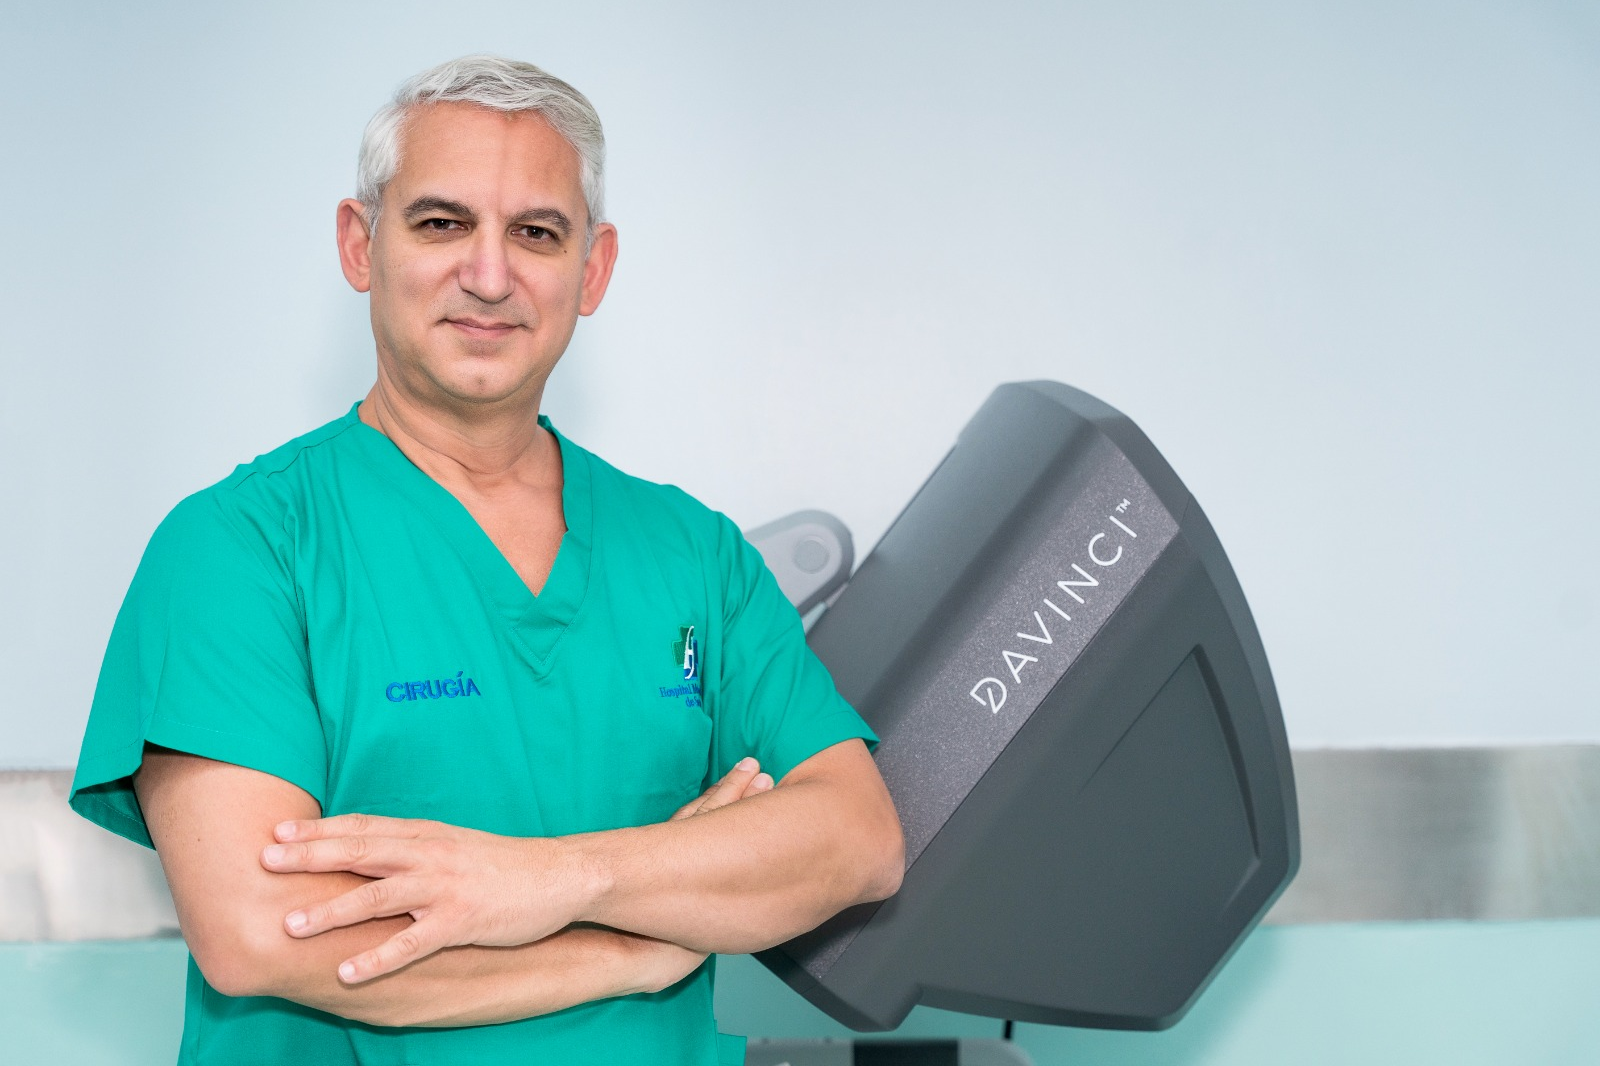 David Samadi cancer de prostata cirugia robotica 2